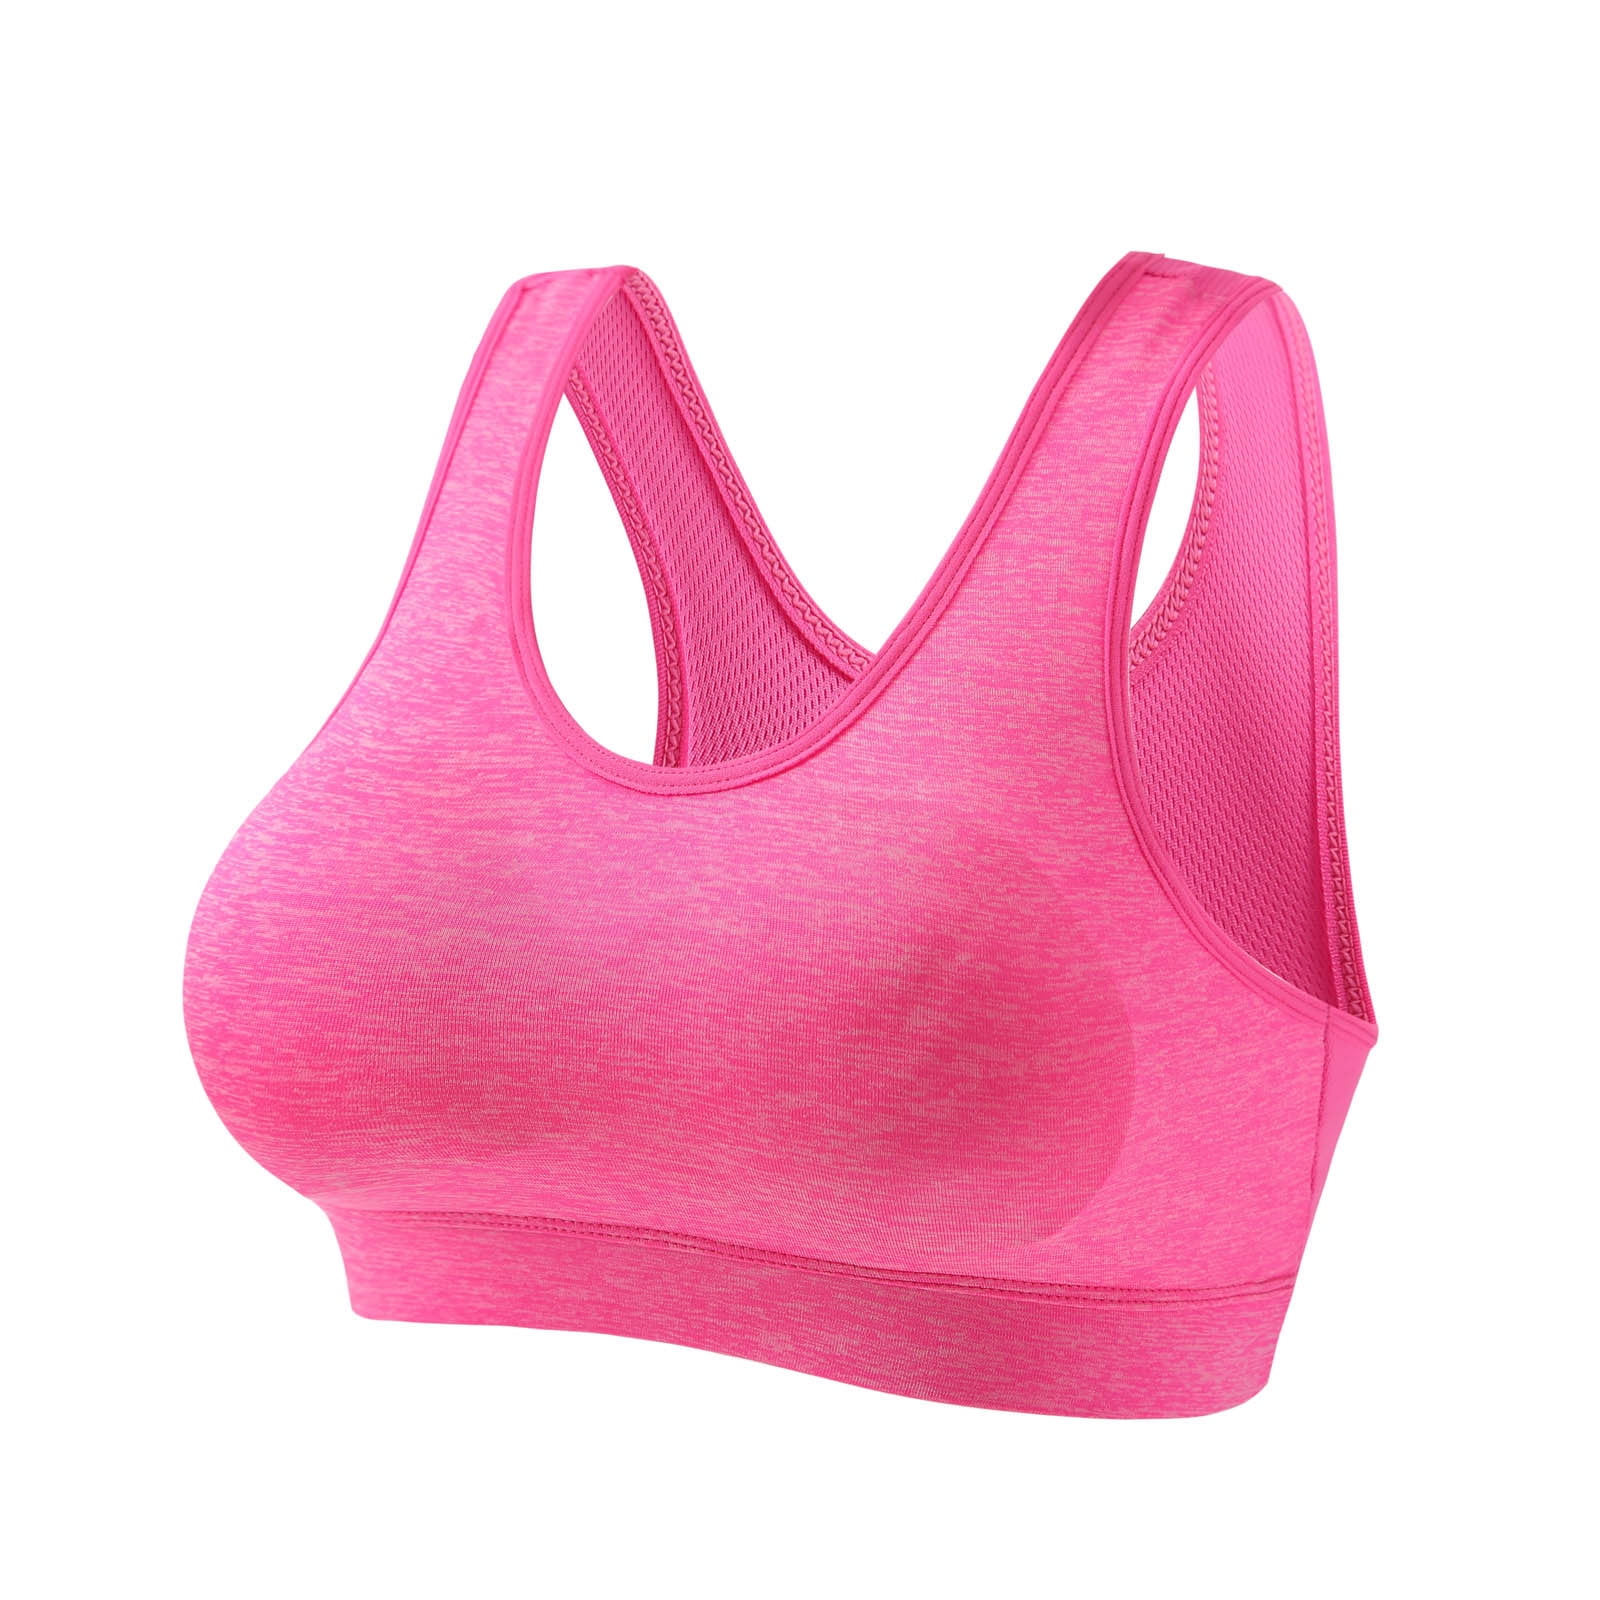 Penkiiy Tube Tops for Women Women's Stretch Strapless Bra,Summer Bandeau Bra,Plus  Size Strapless Bra,Comfort Wireless Bra Hot Pink Bras 